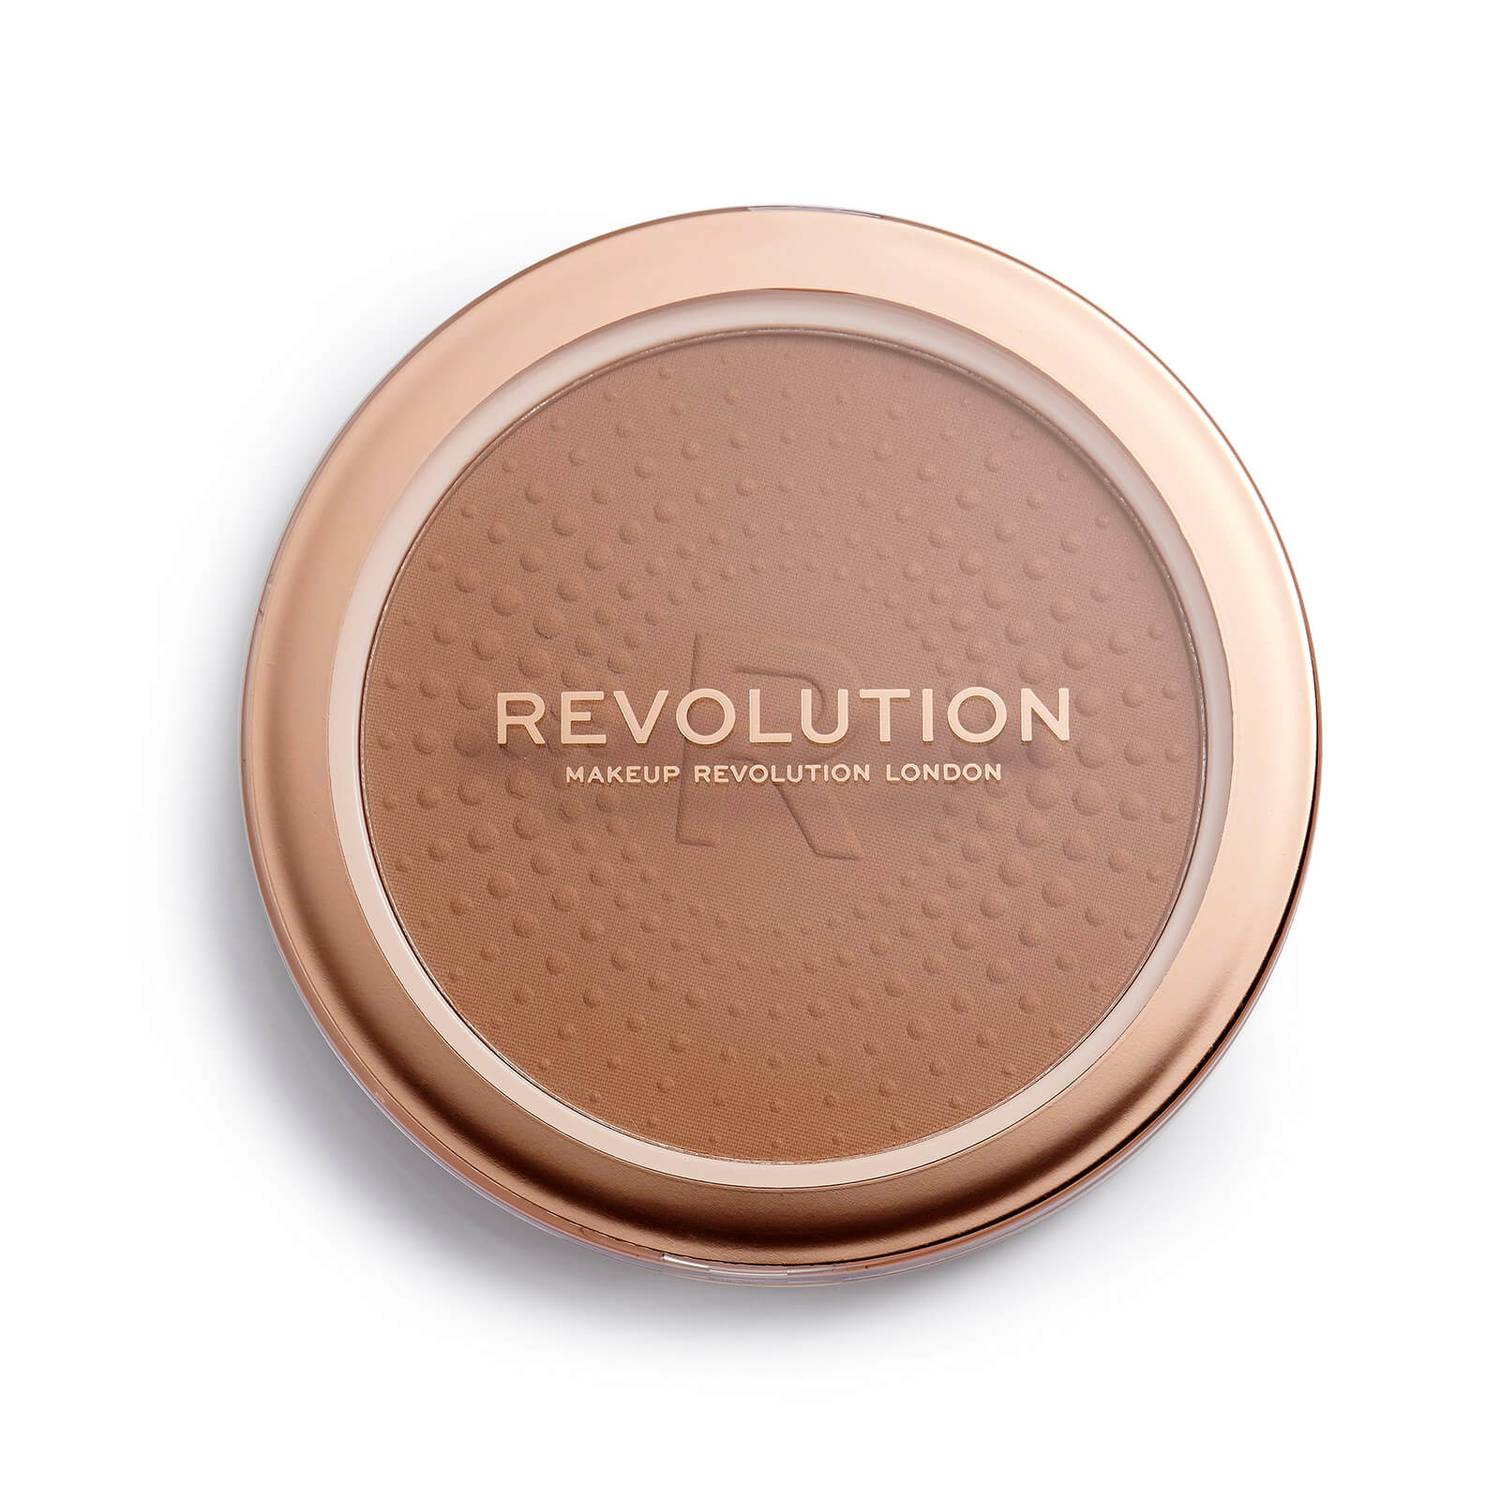 Бронзер Makeup Revolution Mega Bronzer, 02 Warm бронзер для лица i heart revolution wardrobe bronzer palette 19г